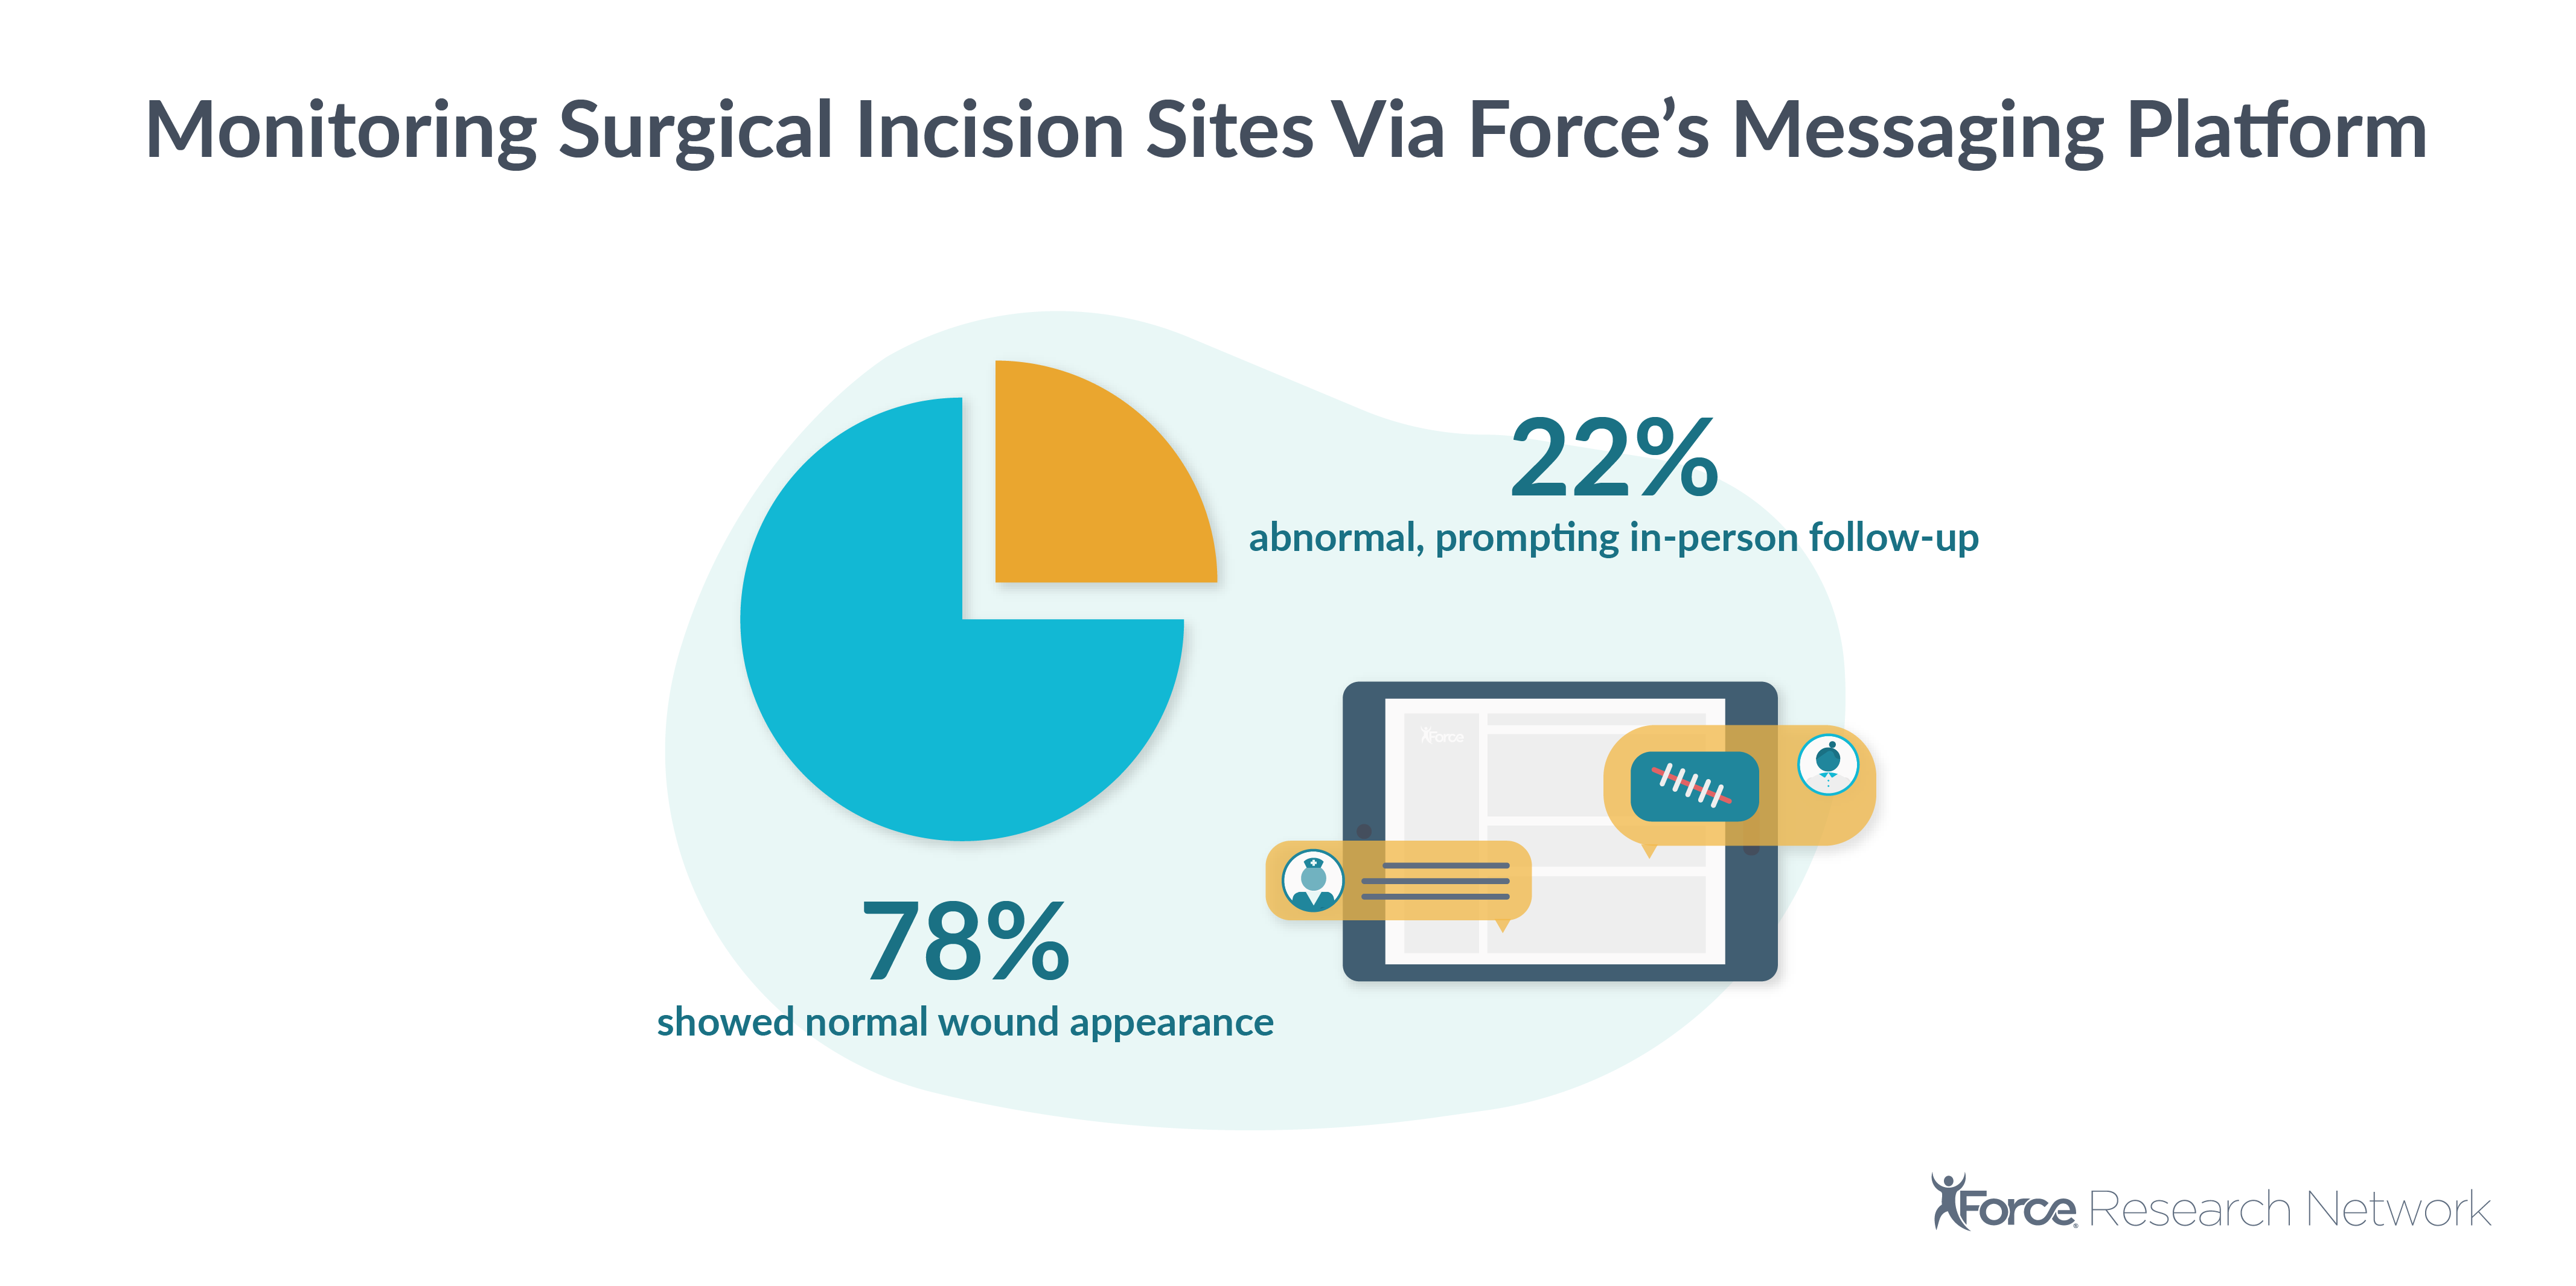 Monitoring surgical incision sites via force’s messaging platform